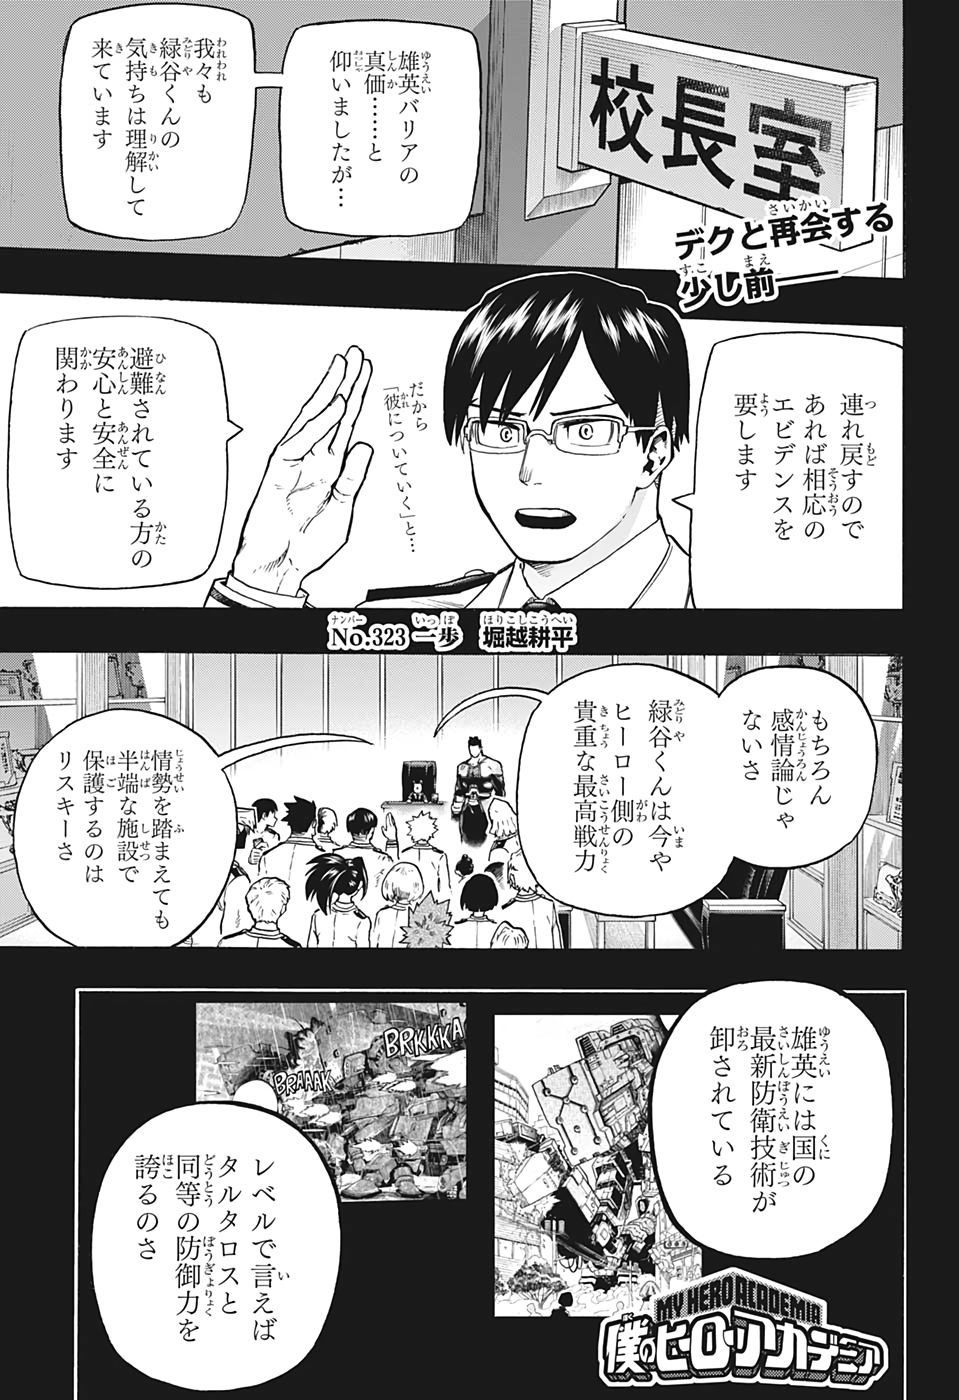 Boku no Hero Academia - Chapter 323 - Page 1